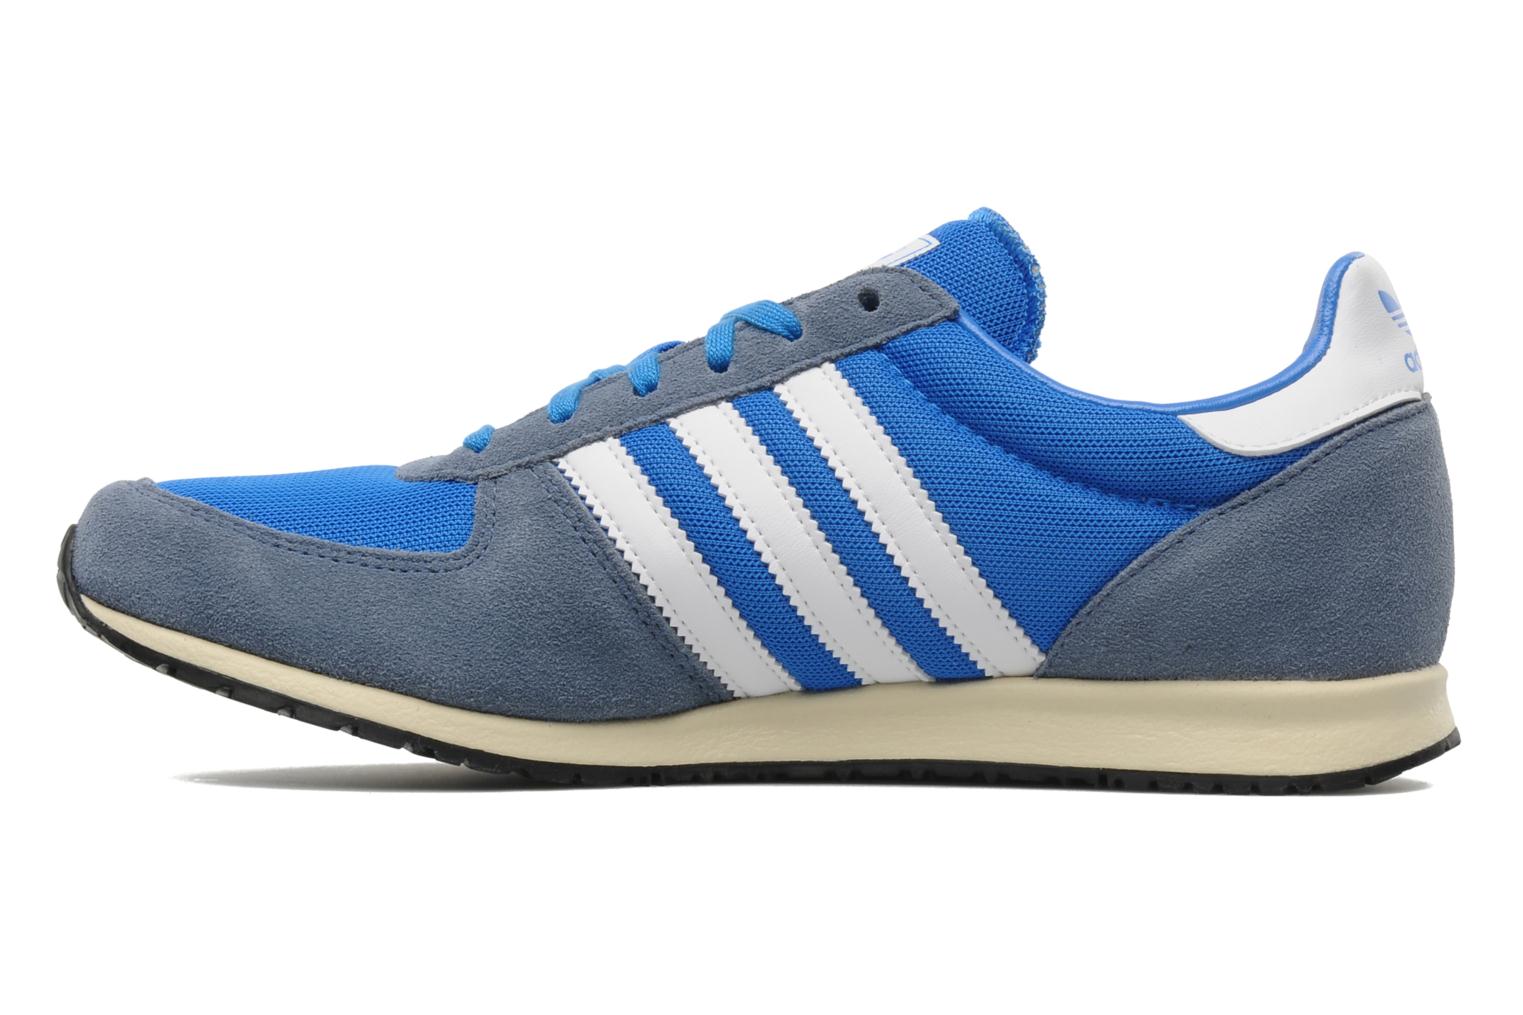 Adidas Originals Adistar Racer (Blue) - Trainers chez Sarenza (106418)